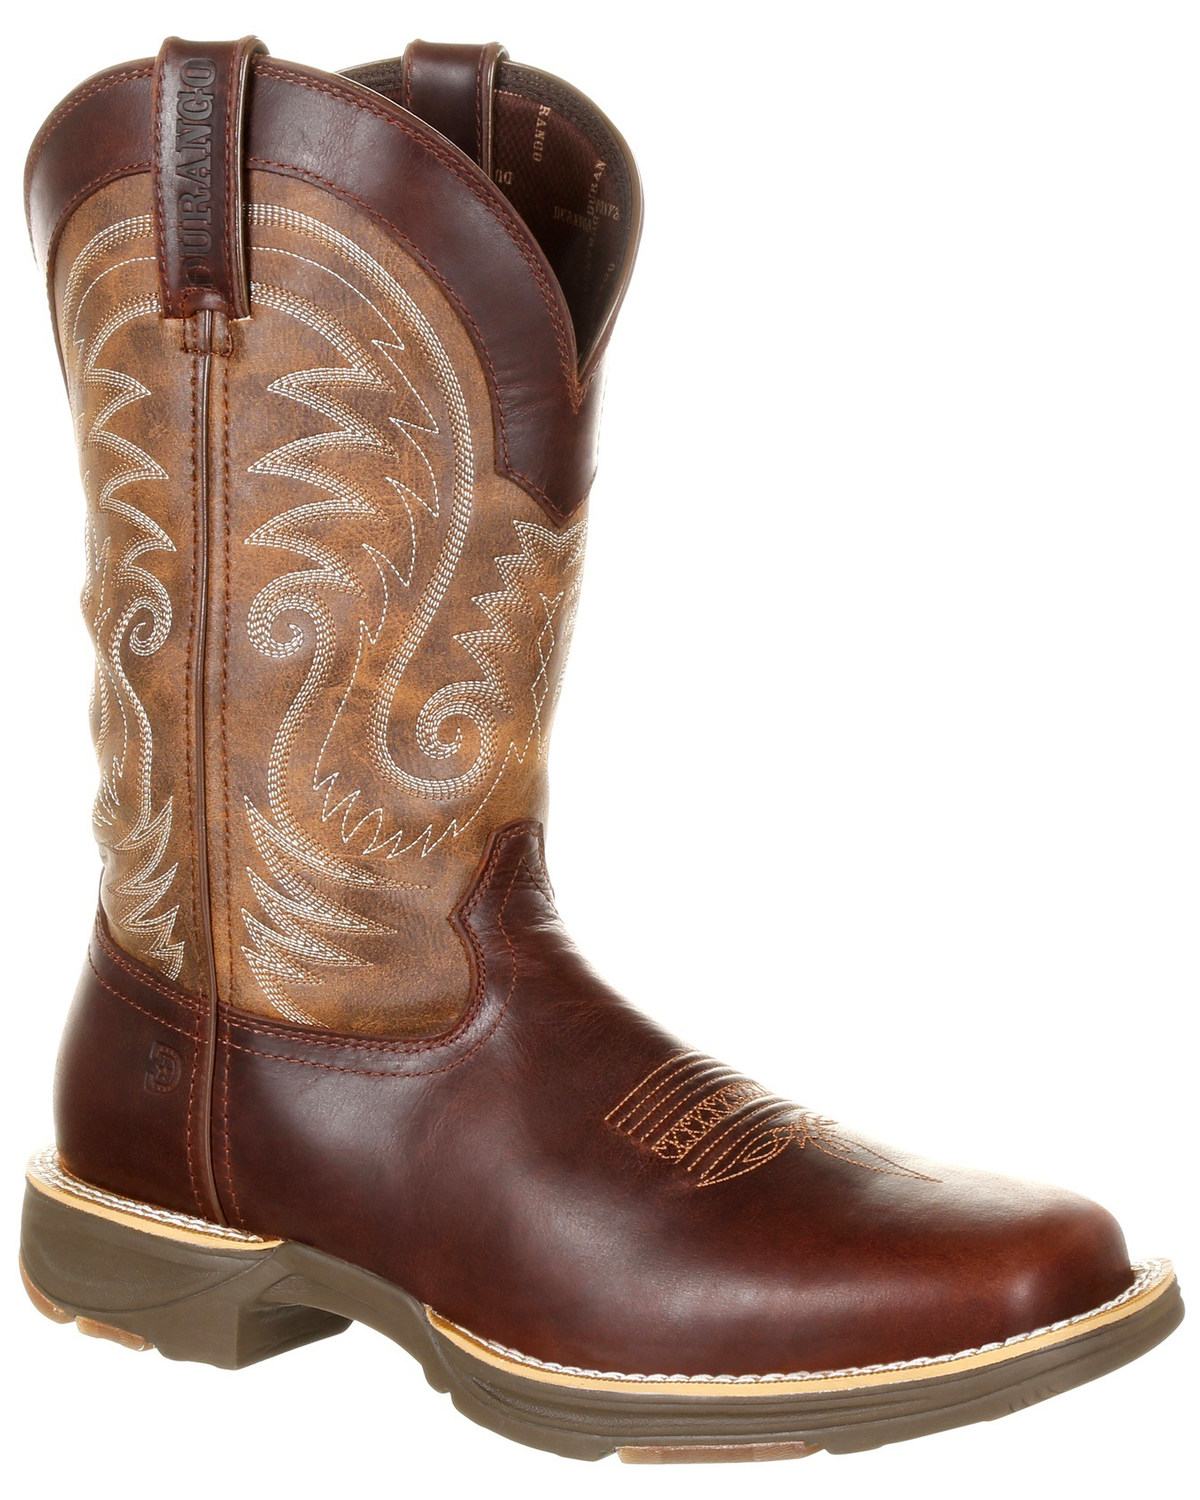 Durango Men's Ultralite Waterproof Western Boots - Square Toe